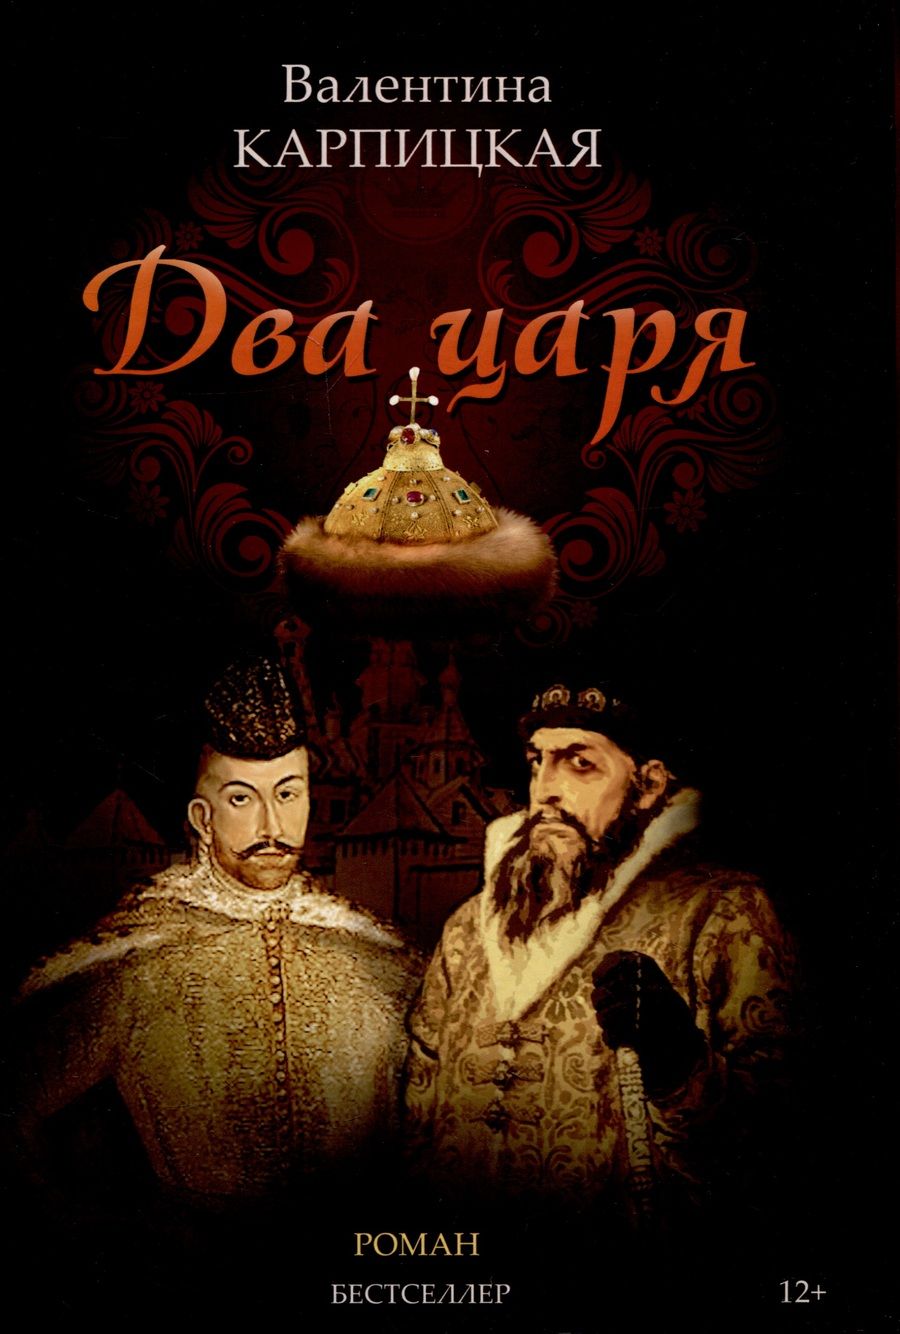 Обложка книги "Карпицкая: Два царя"